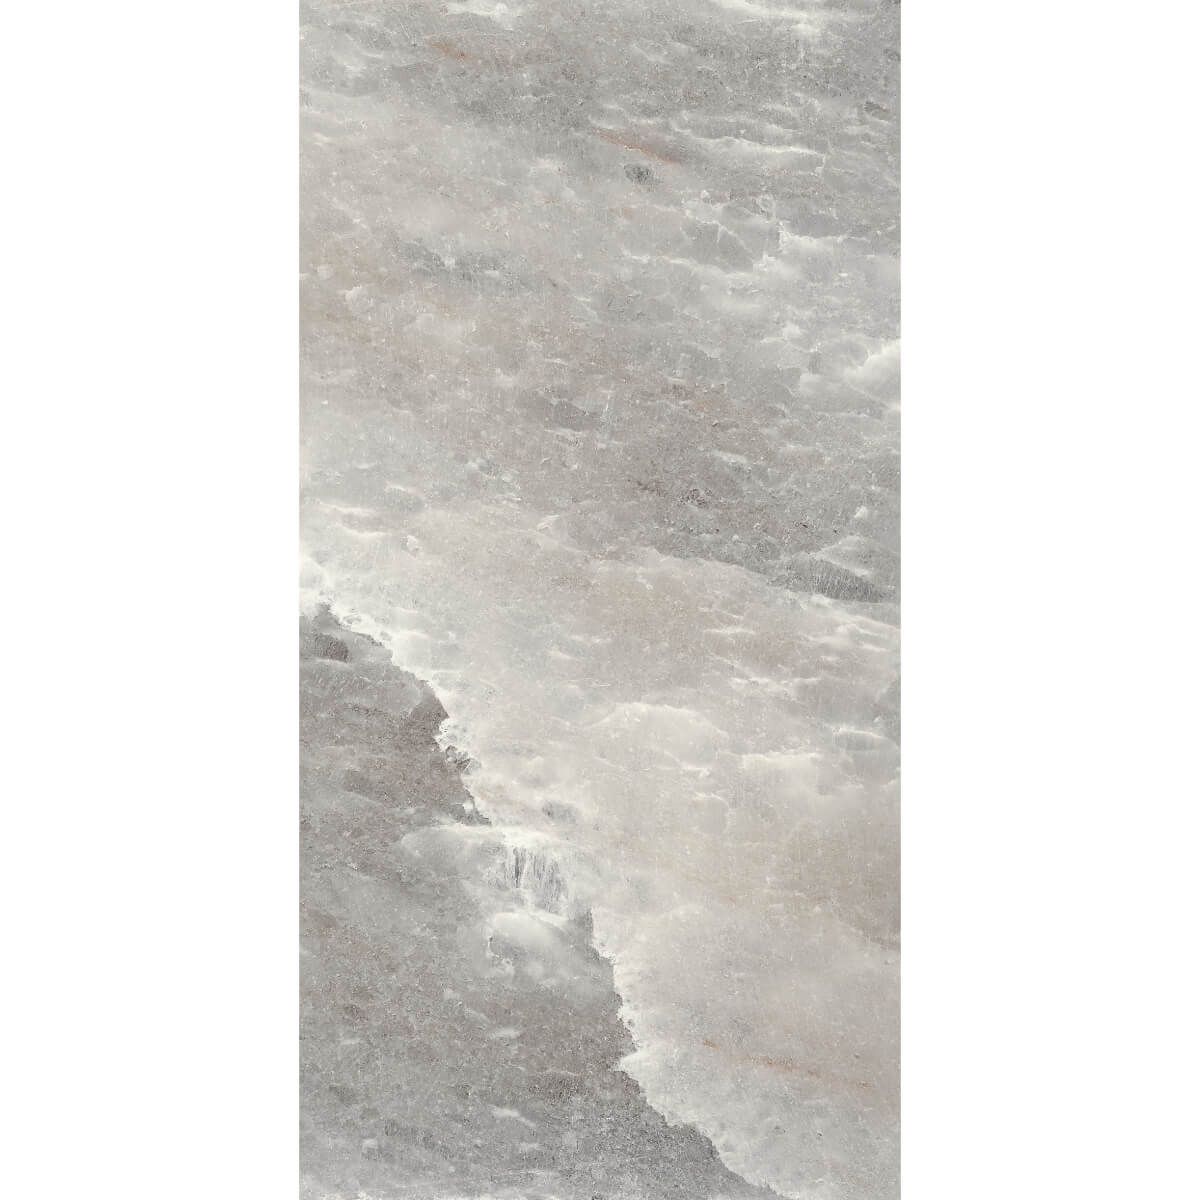 Gres Rock Salt Celtic Grey 120x60x1 cm